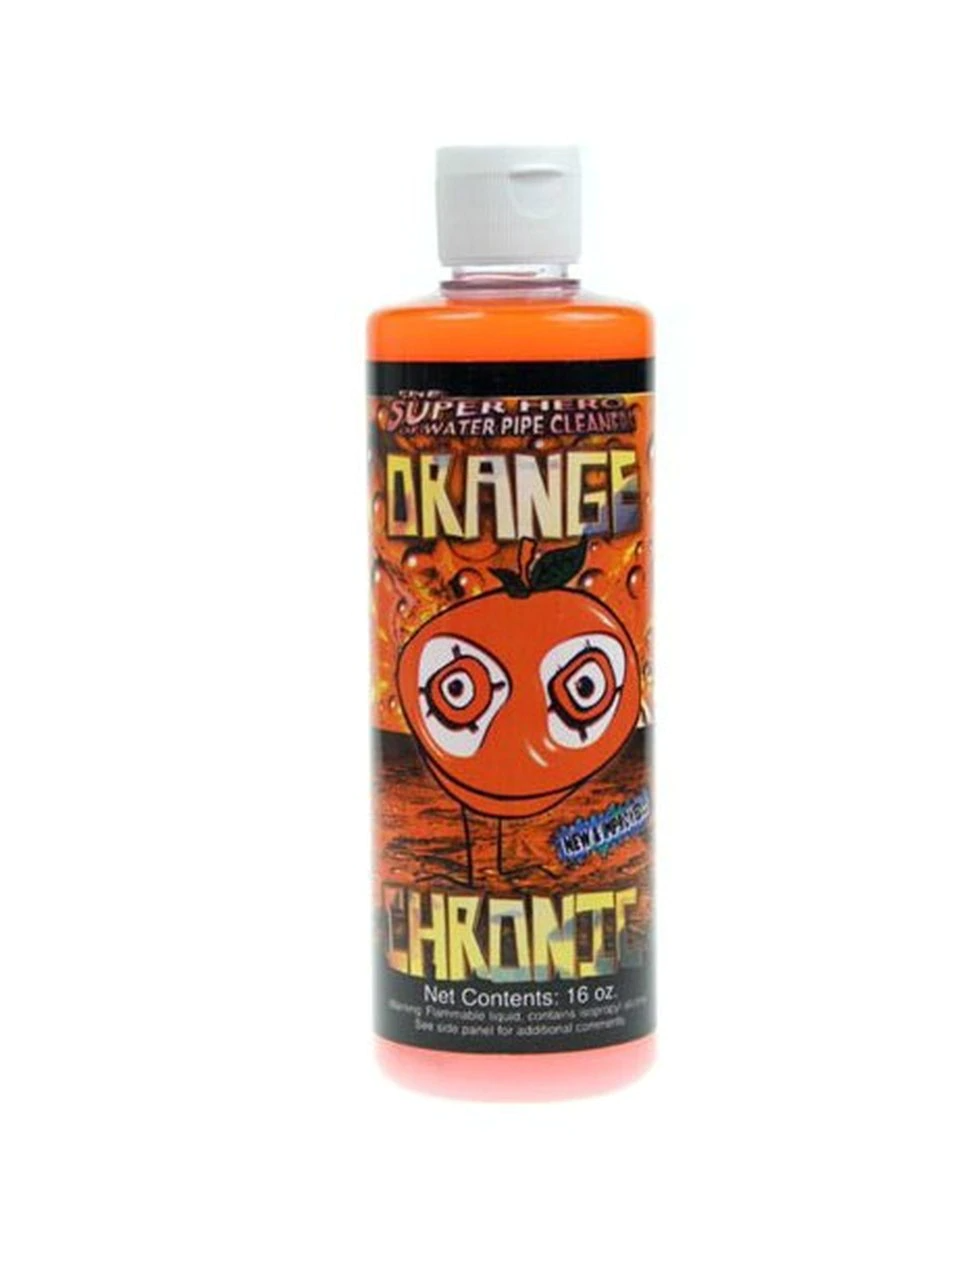 Orange Chronic - Cleaner - 16oz